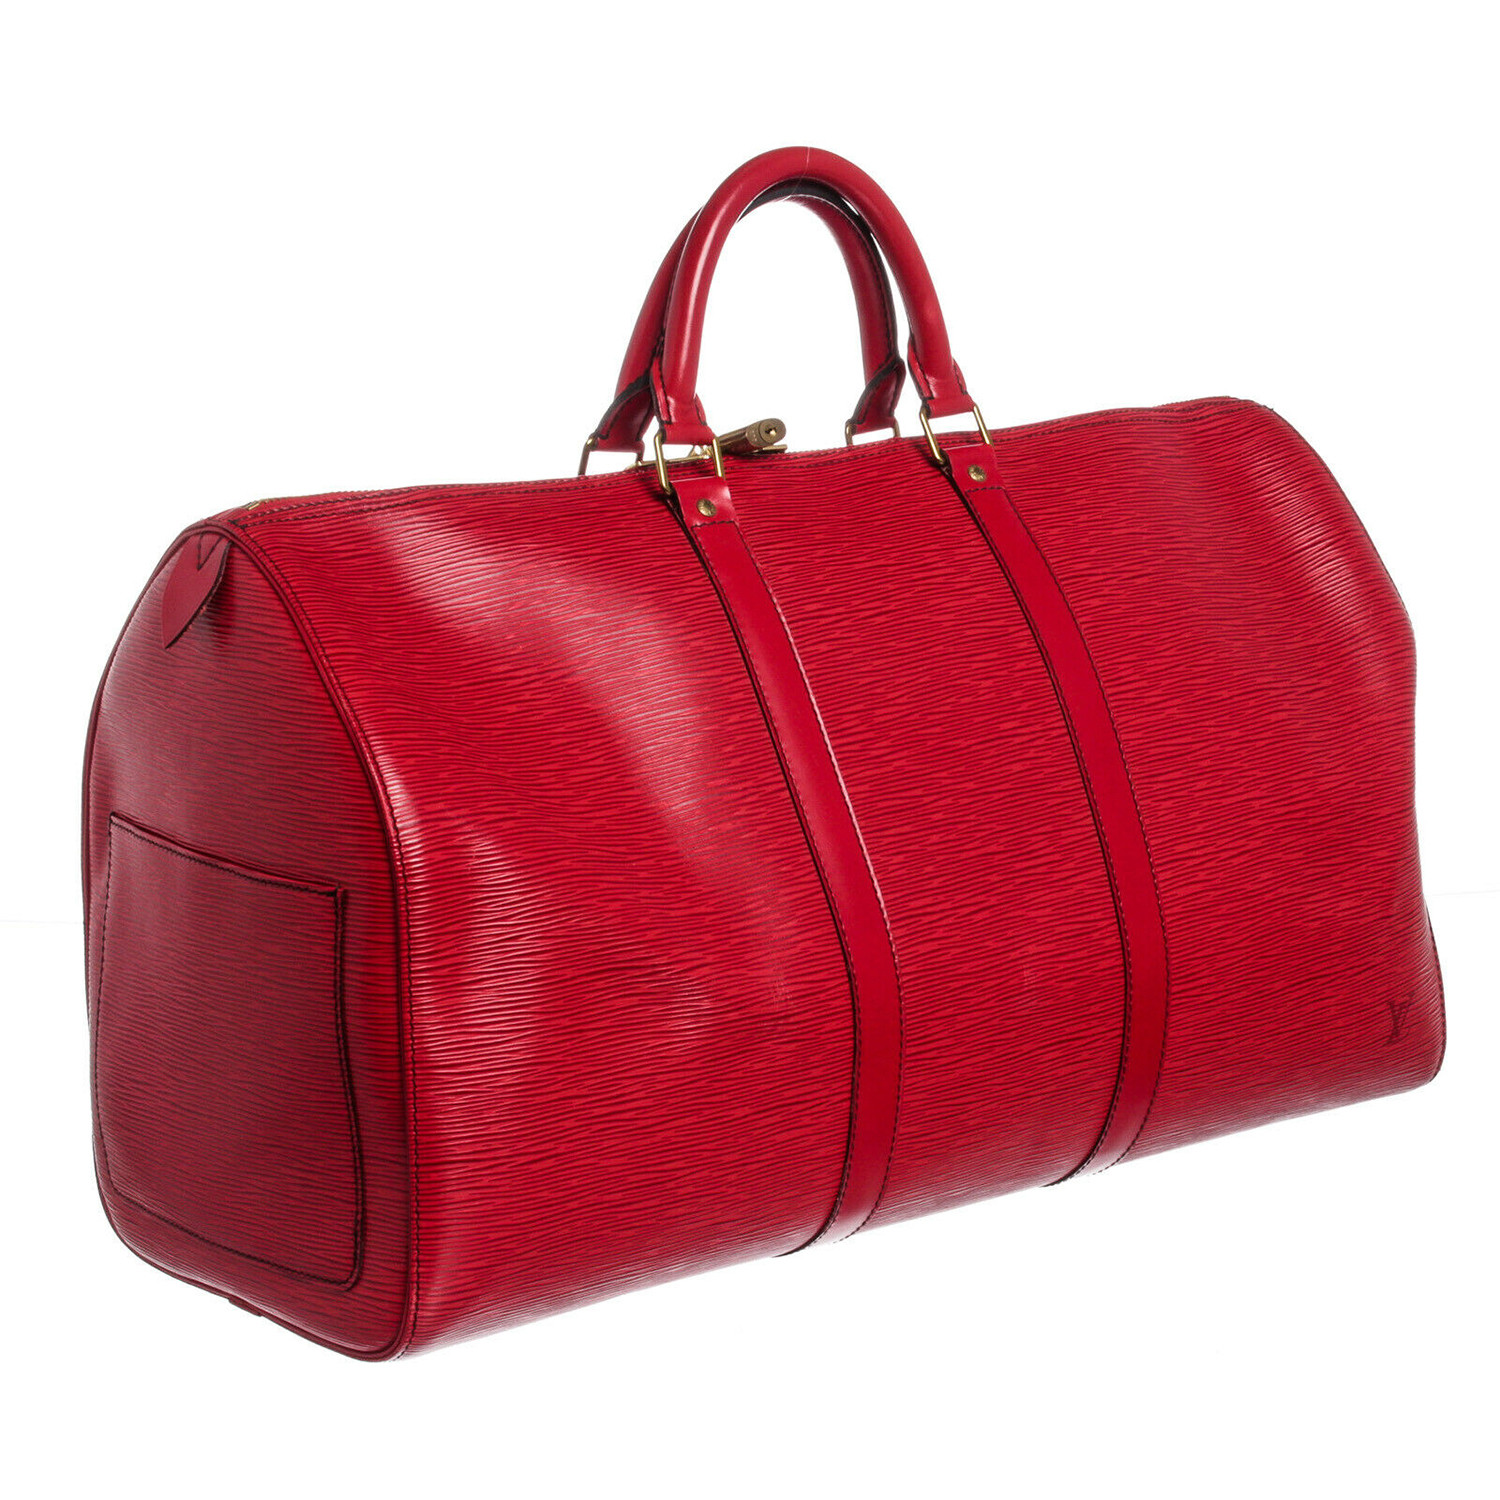 Epi Leather Duffle Bag | NAR Media Kit